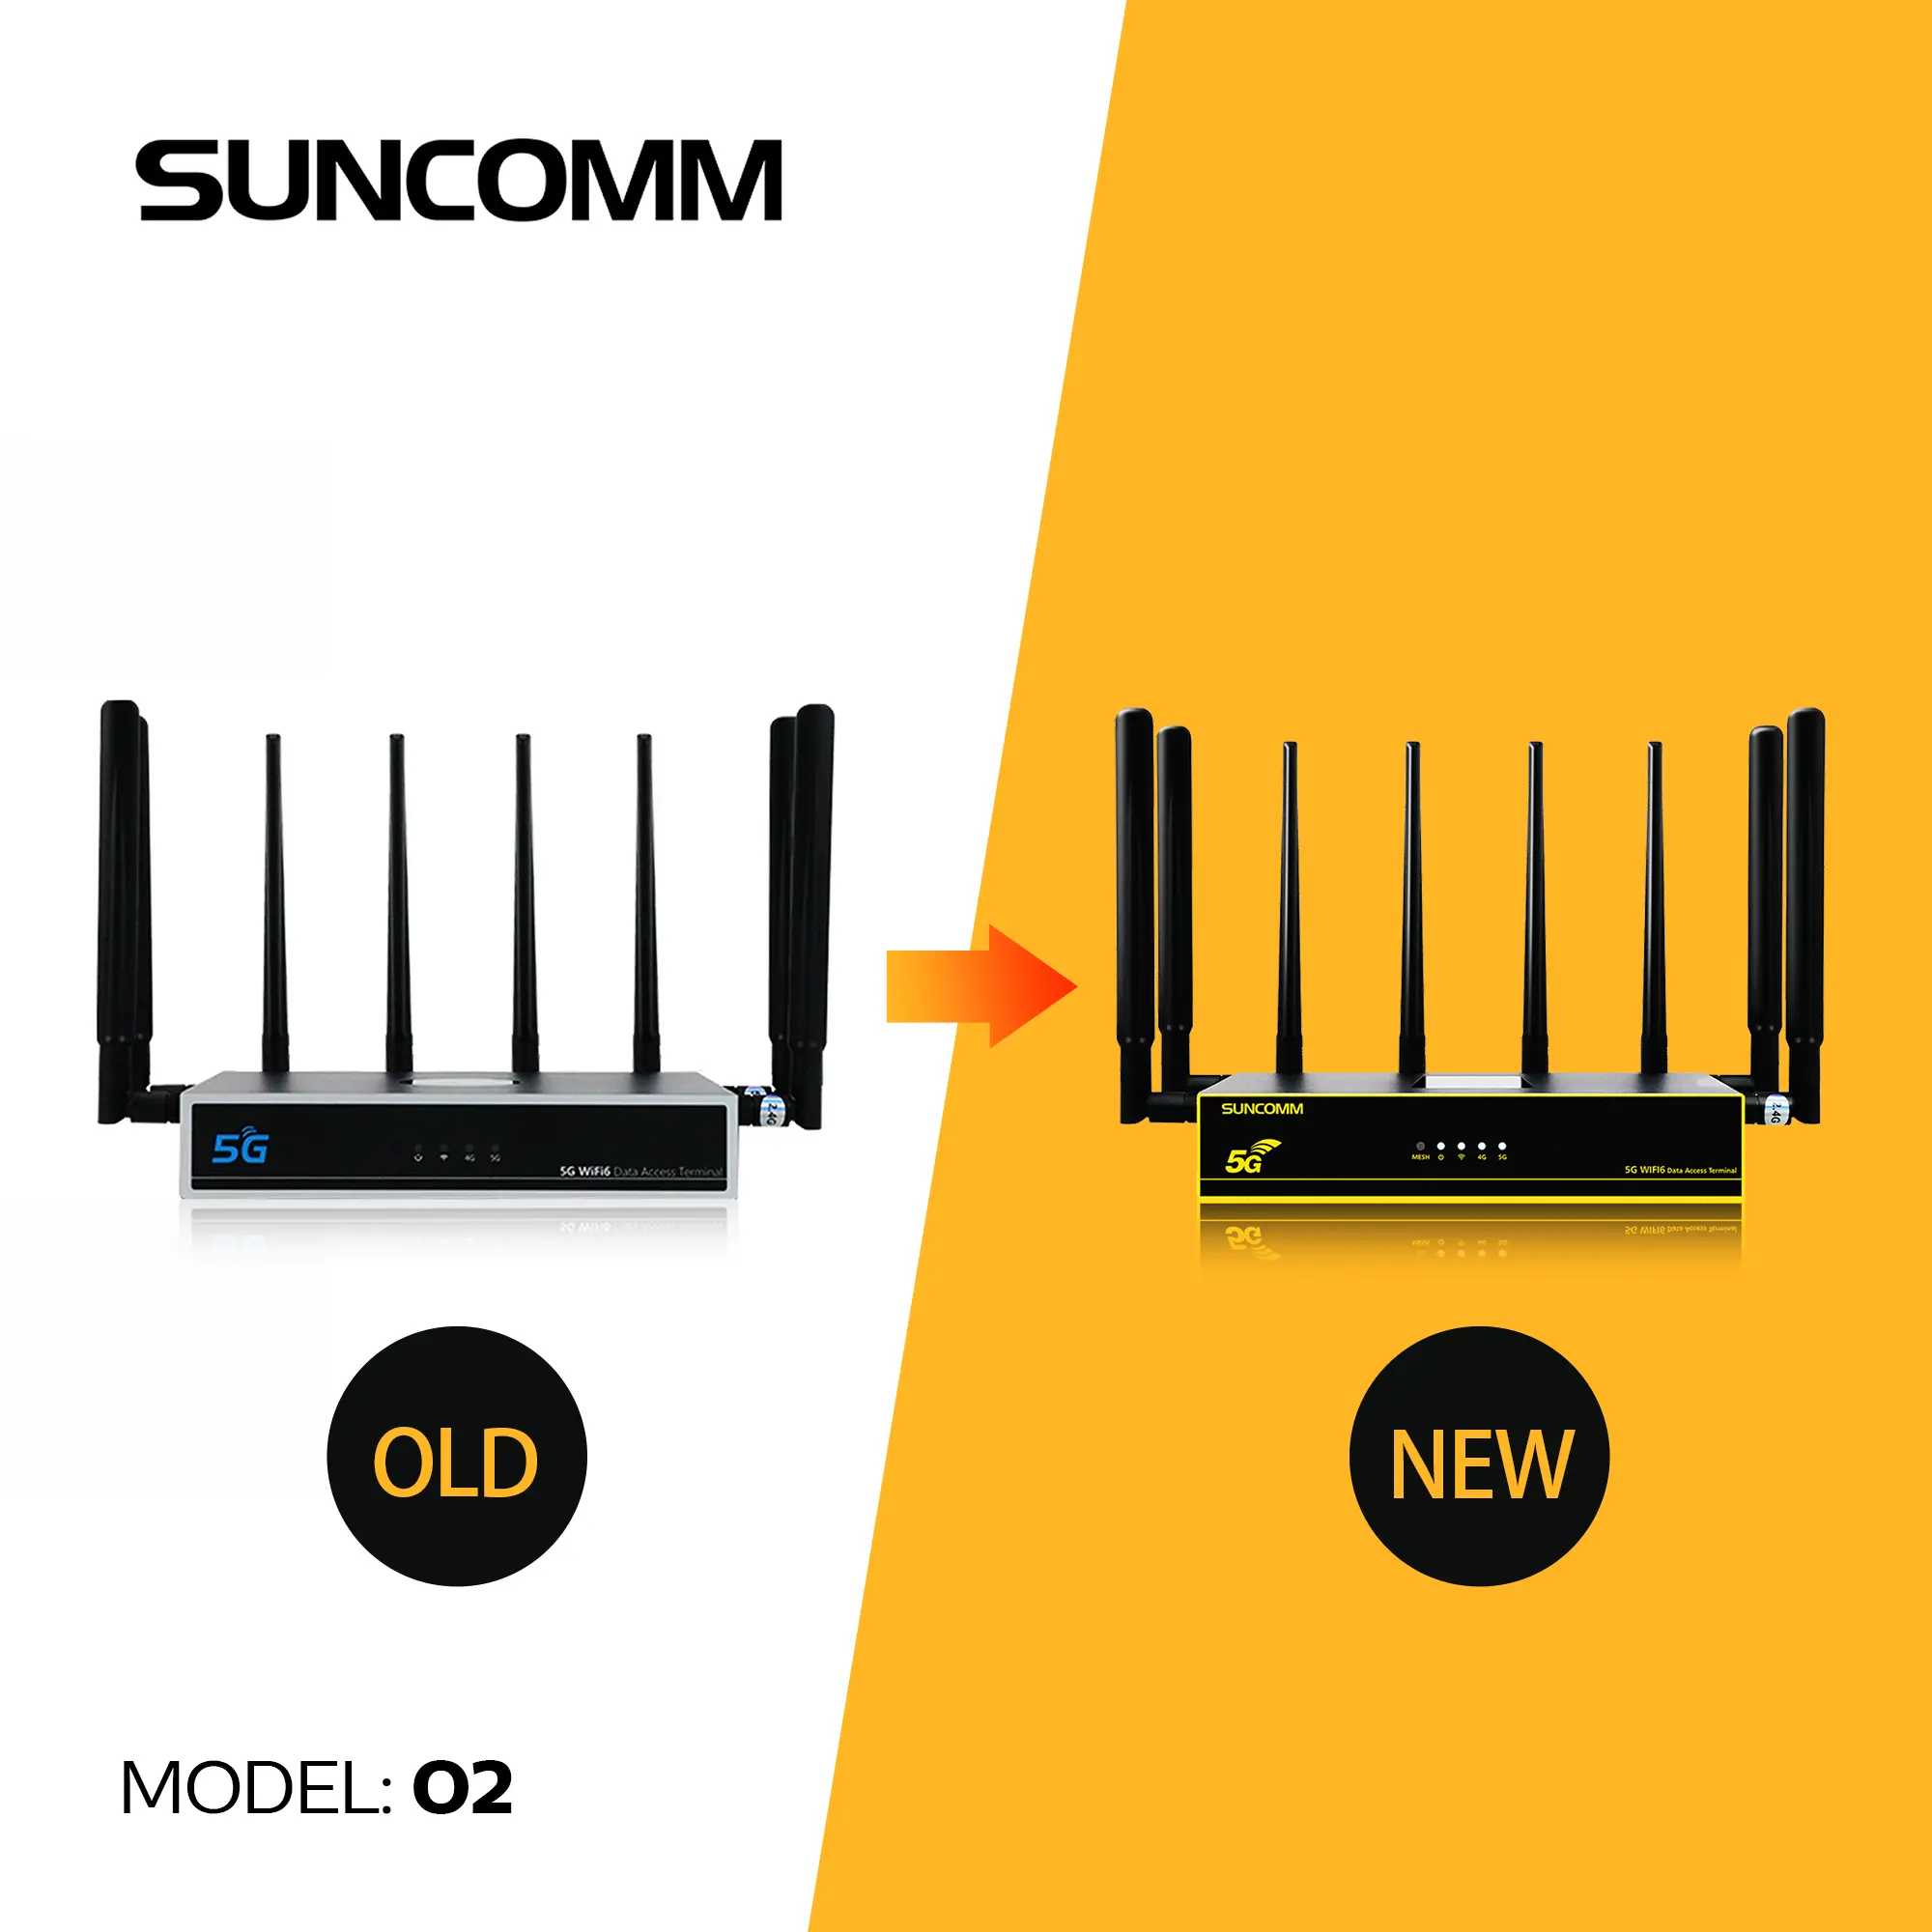 USA Hot Selling 5G Modem WIFI 6 Router mit SIM-Kartens teck platz externe Antenne SUNCOMM O2 Mesh Home Enterprise Router 5g Router